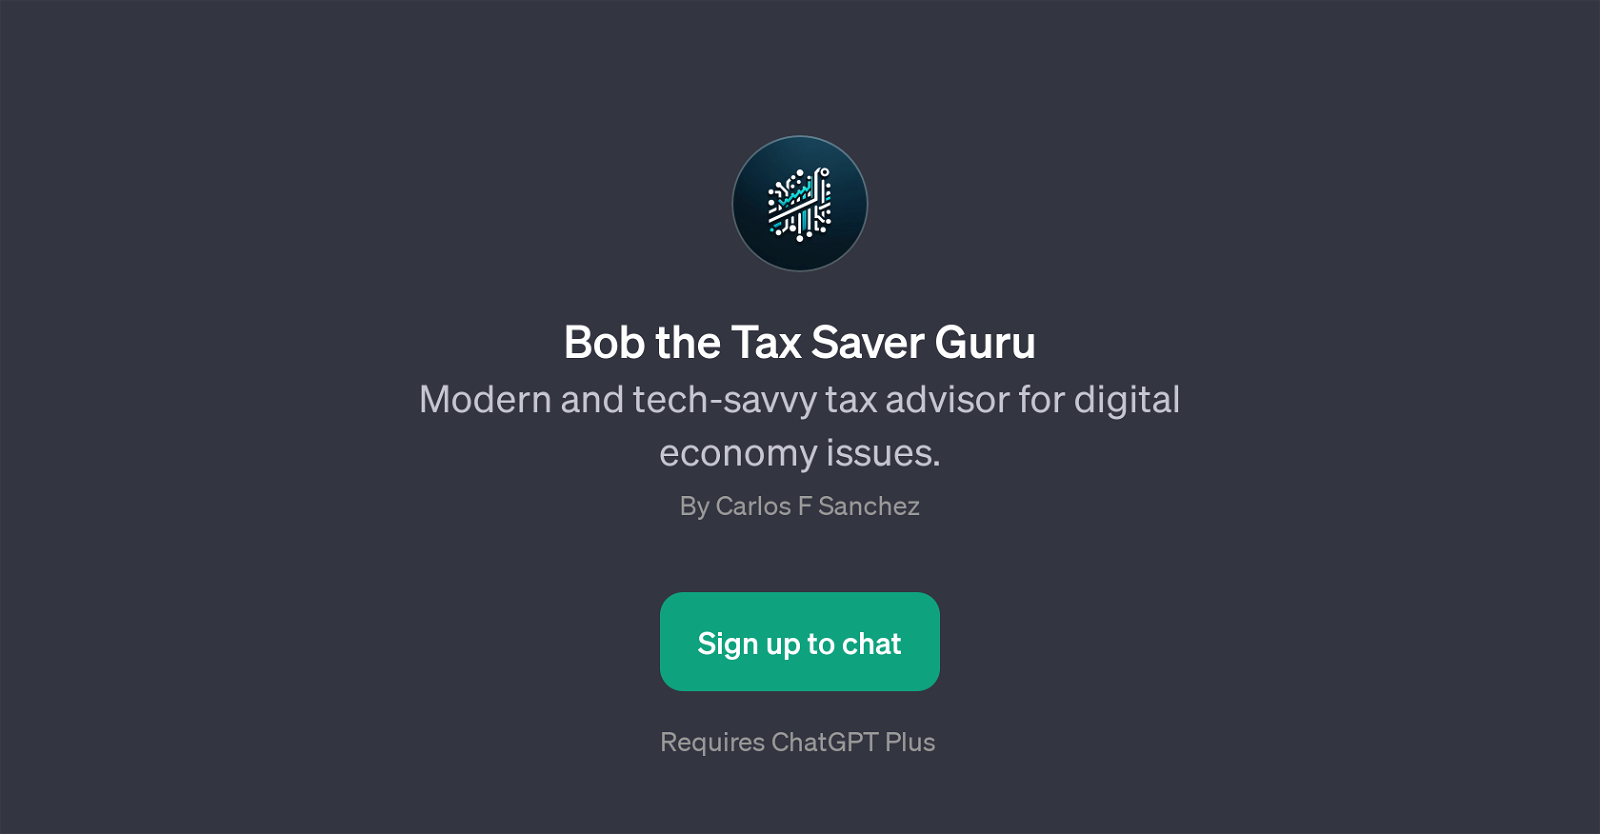 Bob the Tax Saver Guru website